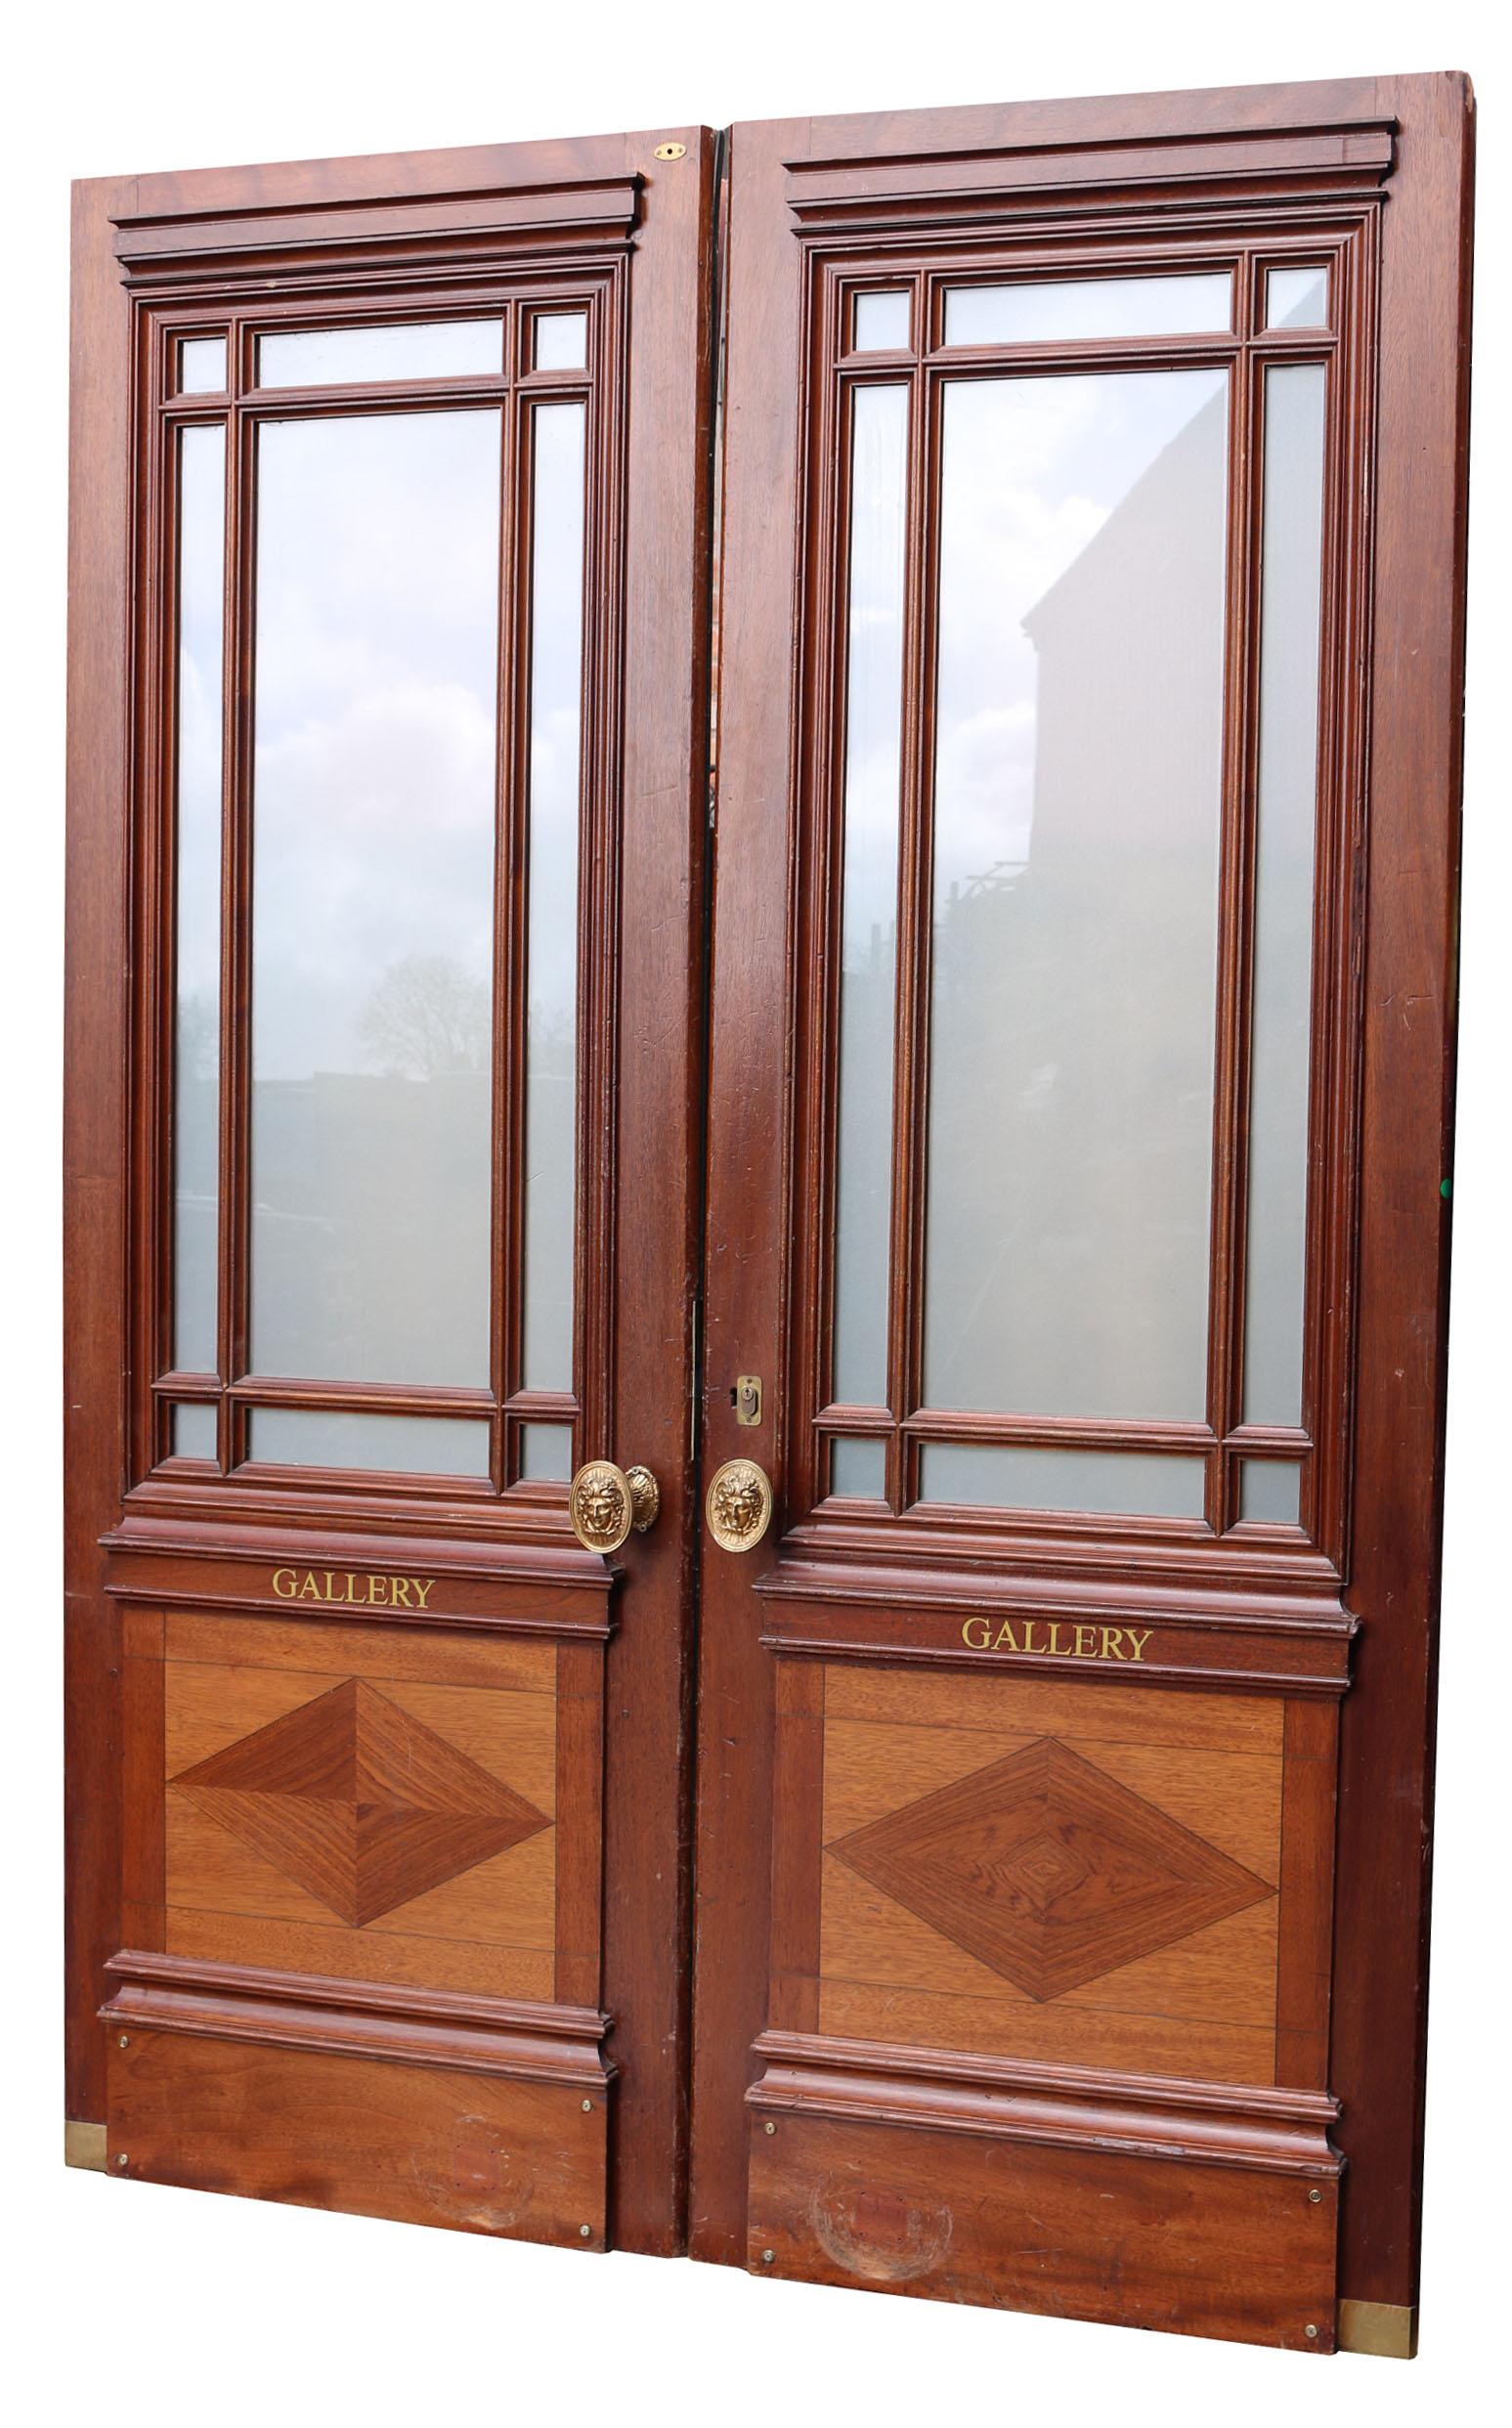 1930s internal doors with glass